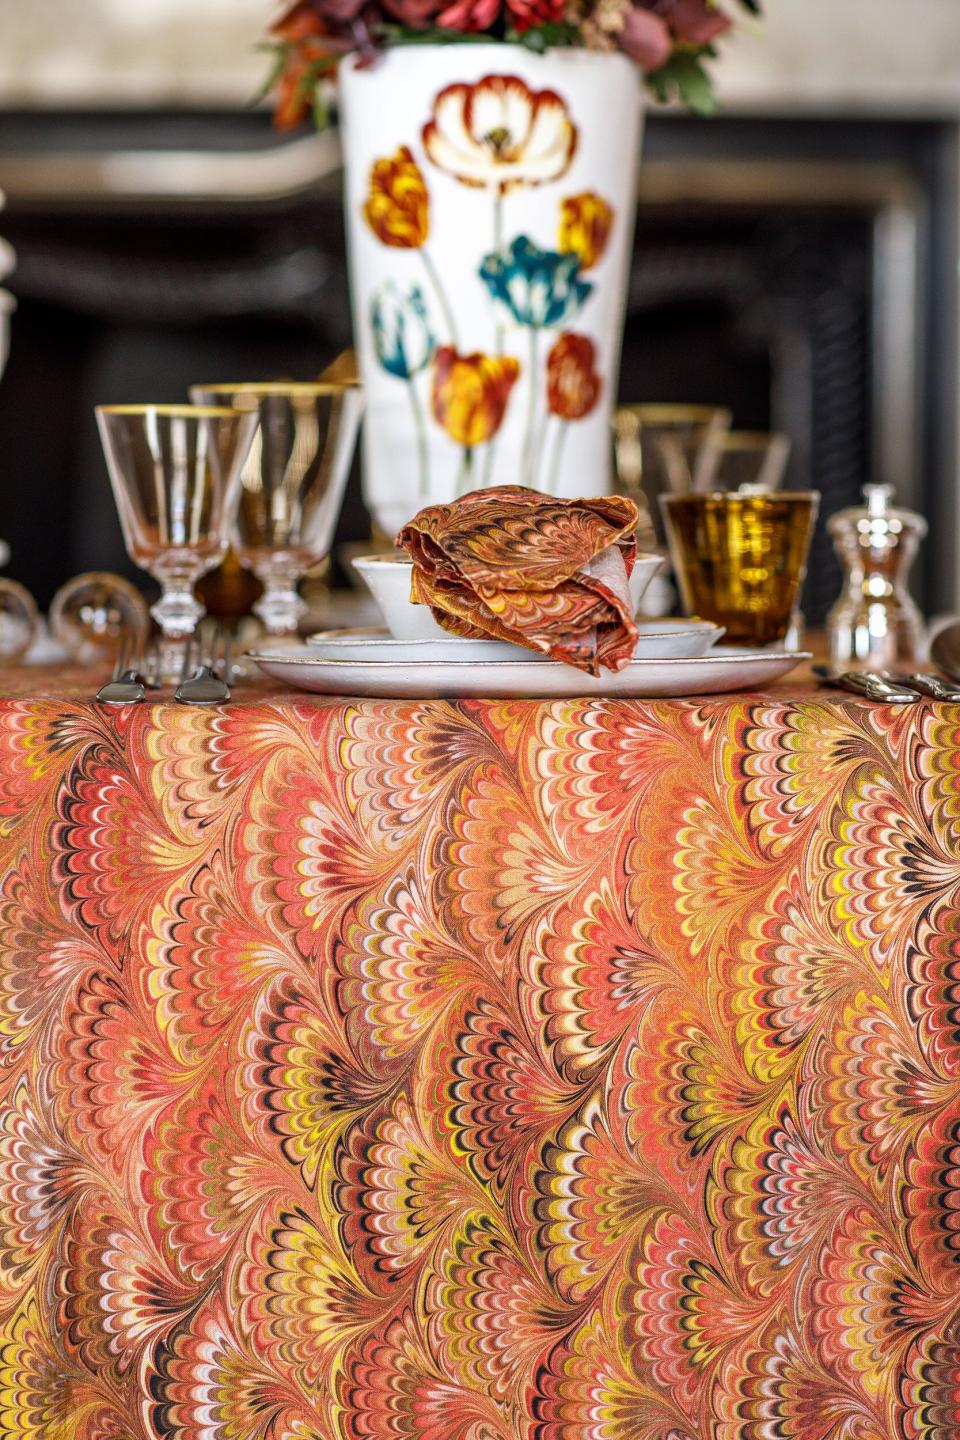 1) Summerrill & Bishop Marble Linen Tablecloth